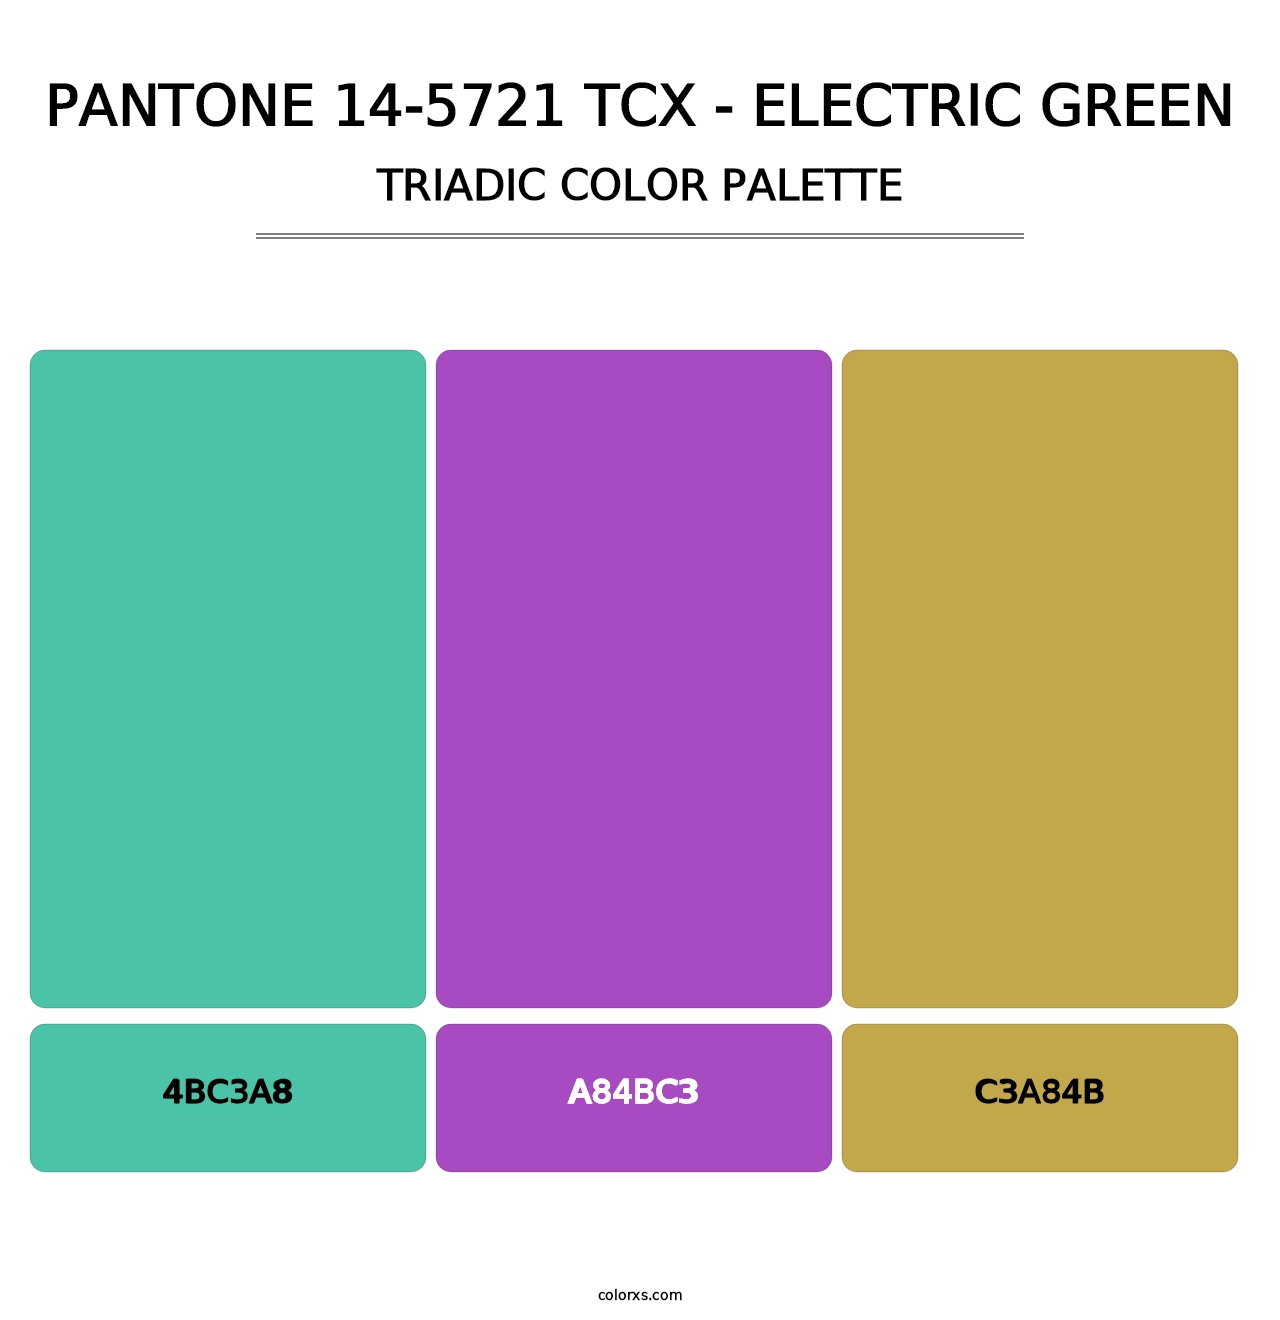 PANTONE 14-5721 TCX - Electric Green - Triadic Color Palette